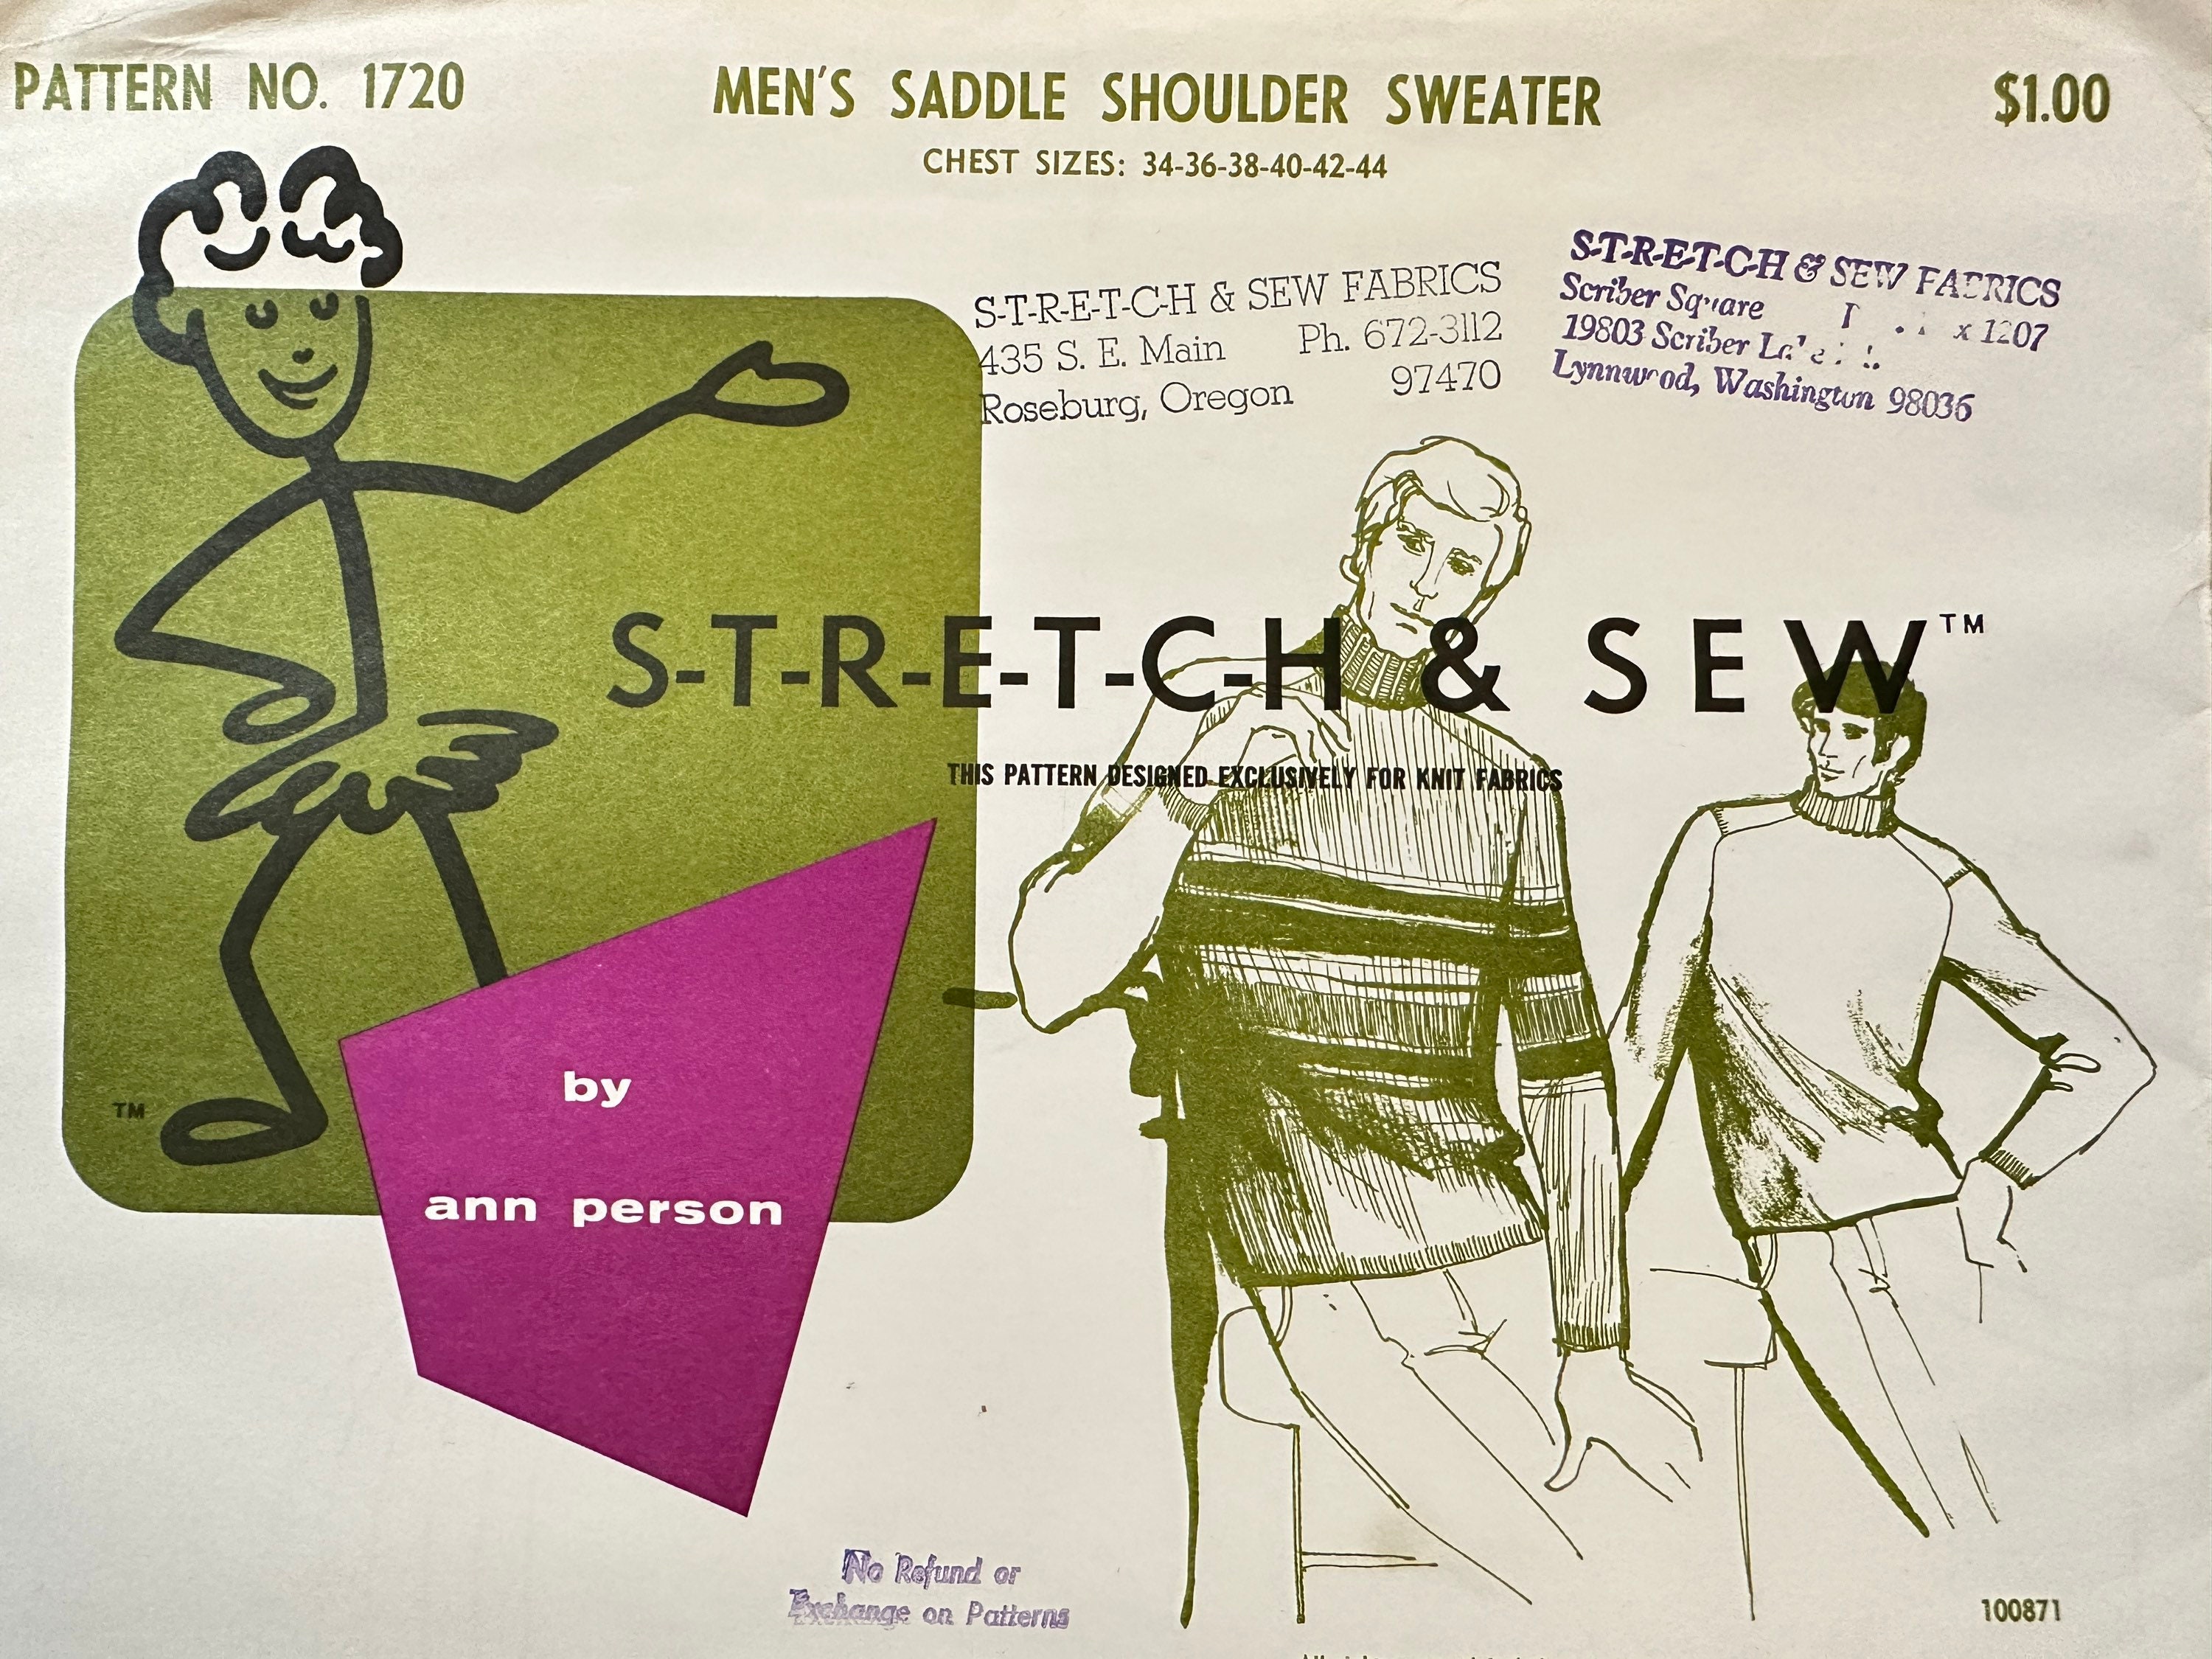 McCall’s Sewing Pattern 4490. Vintage Sewing Pattern. Dress Pattern. Shawl.